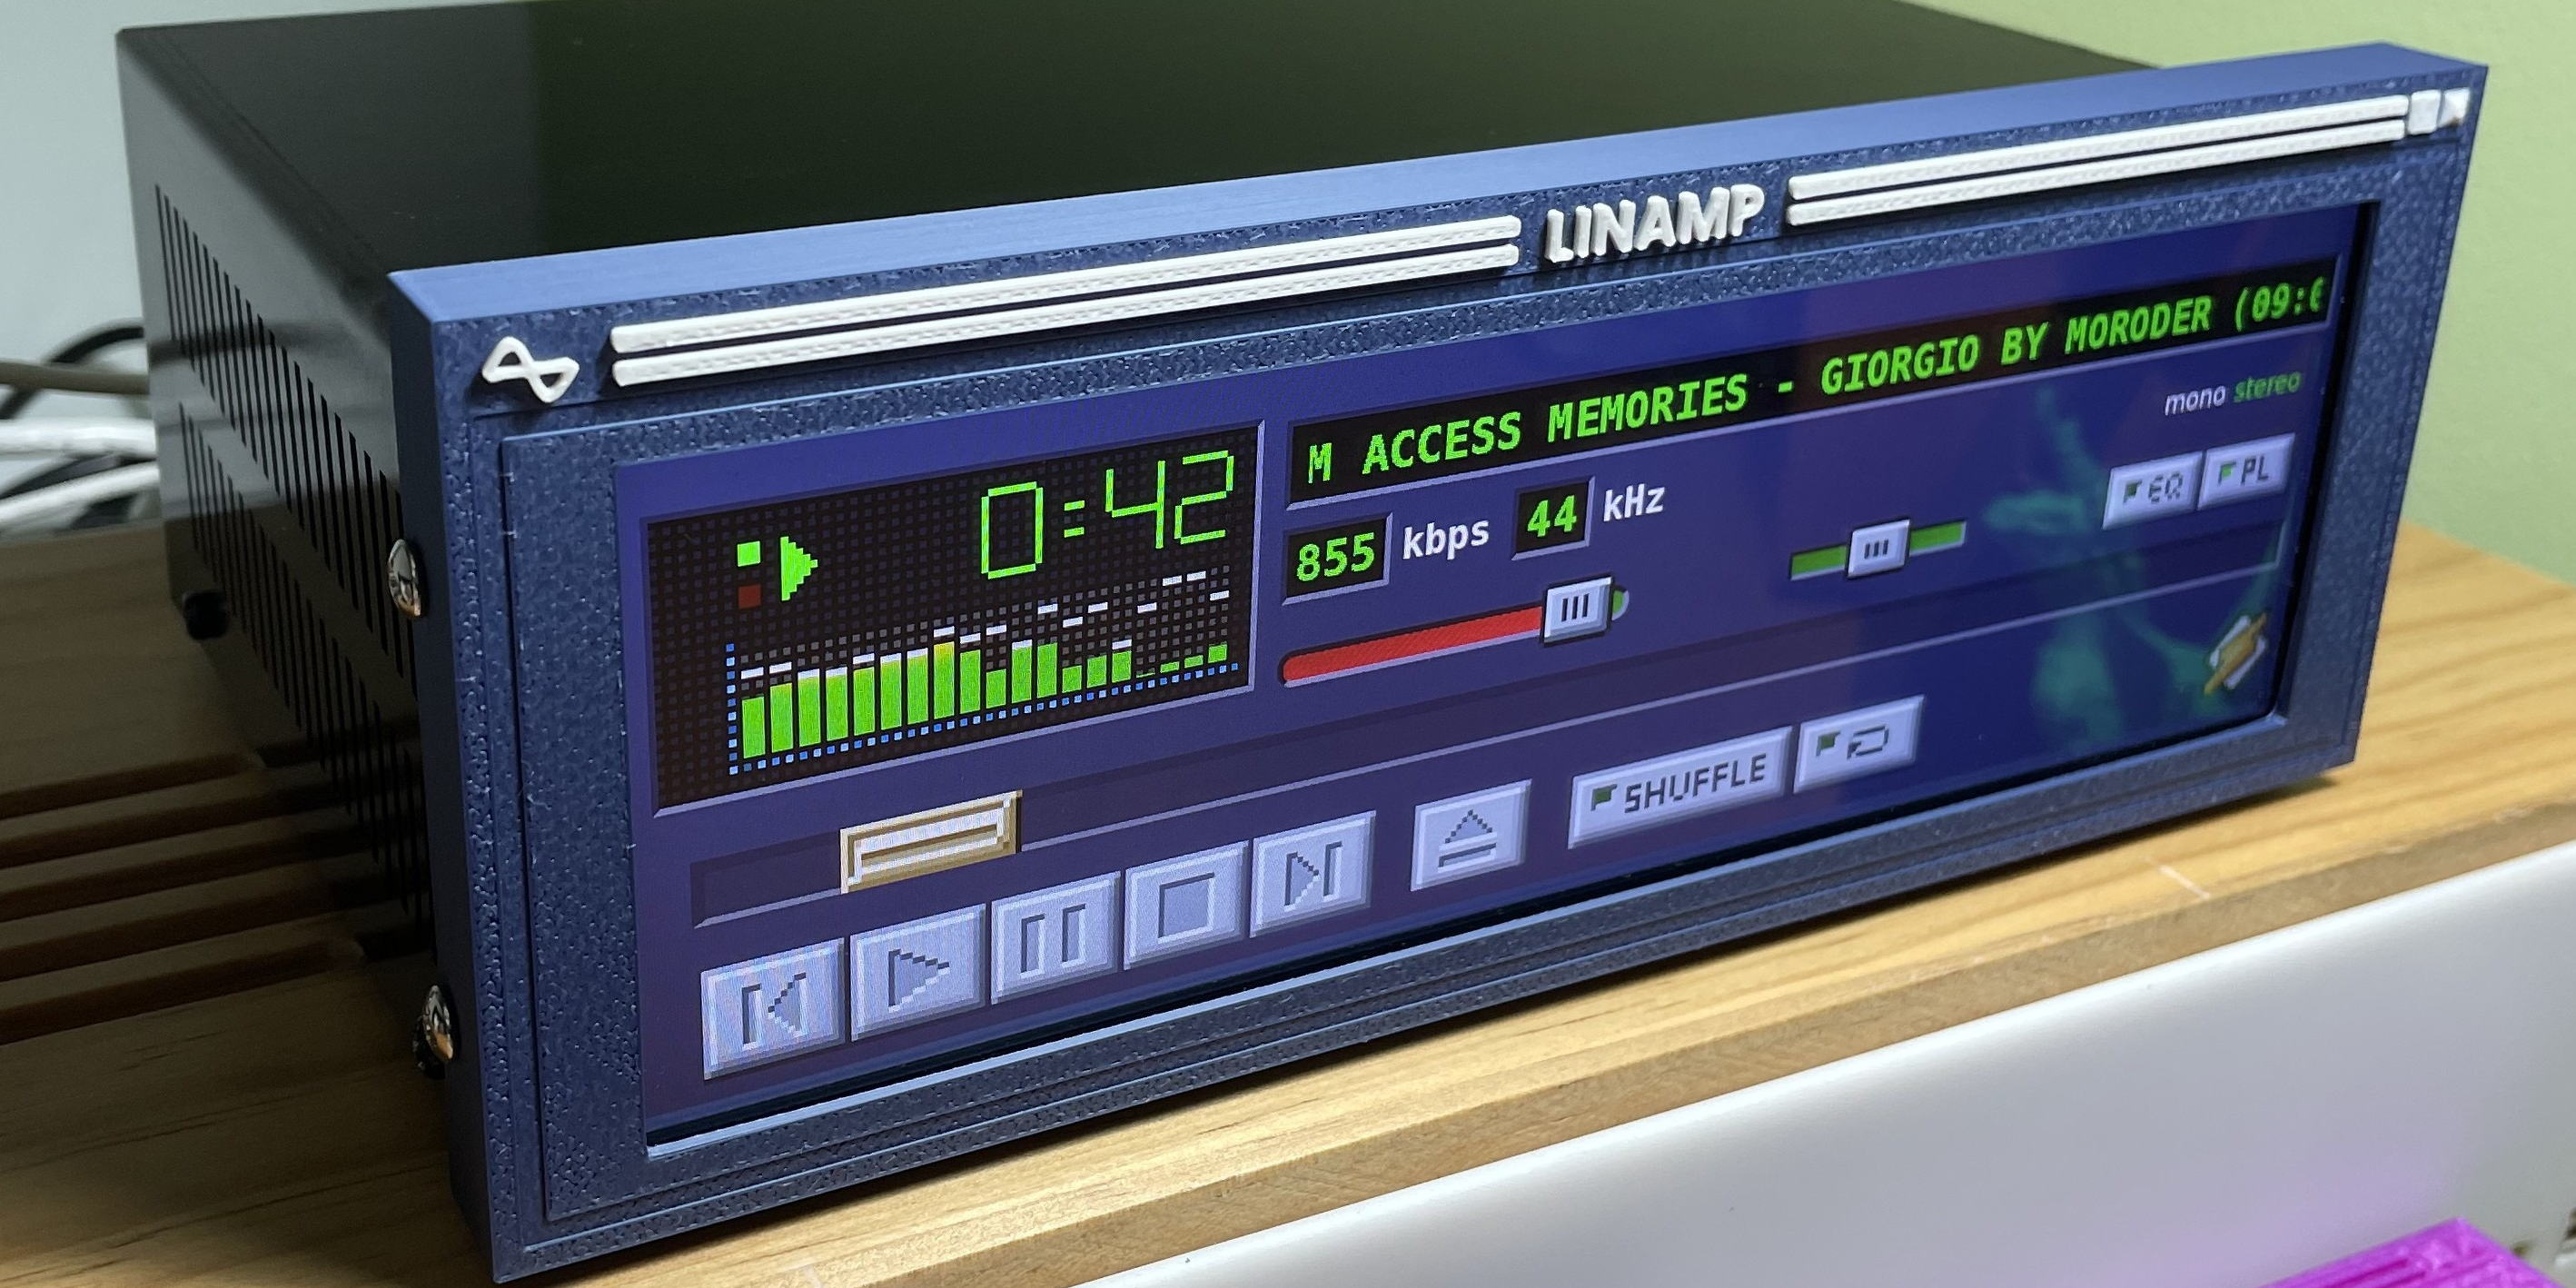 Представлена физическая версия плеера Winamp — аудиосистема Linamp